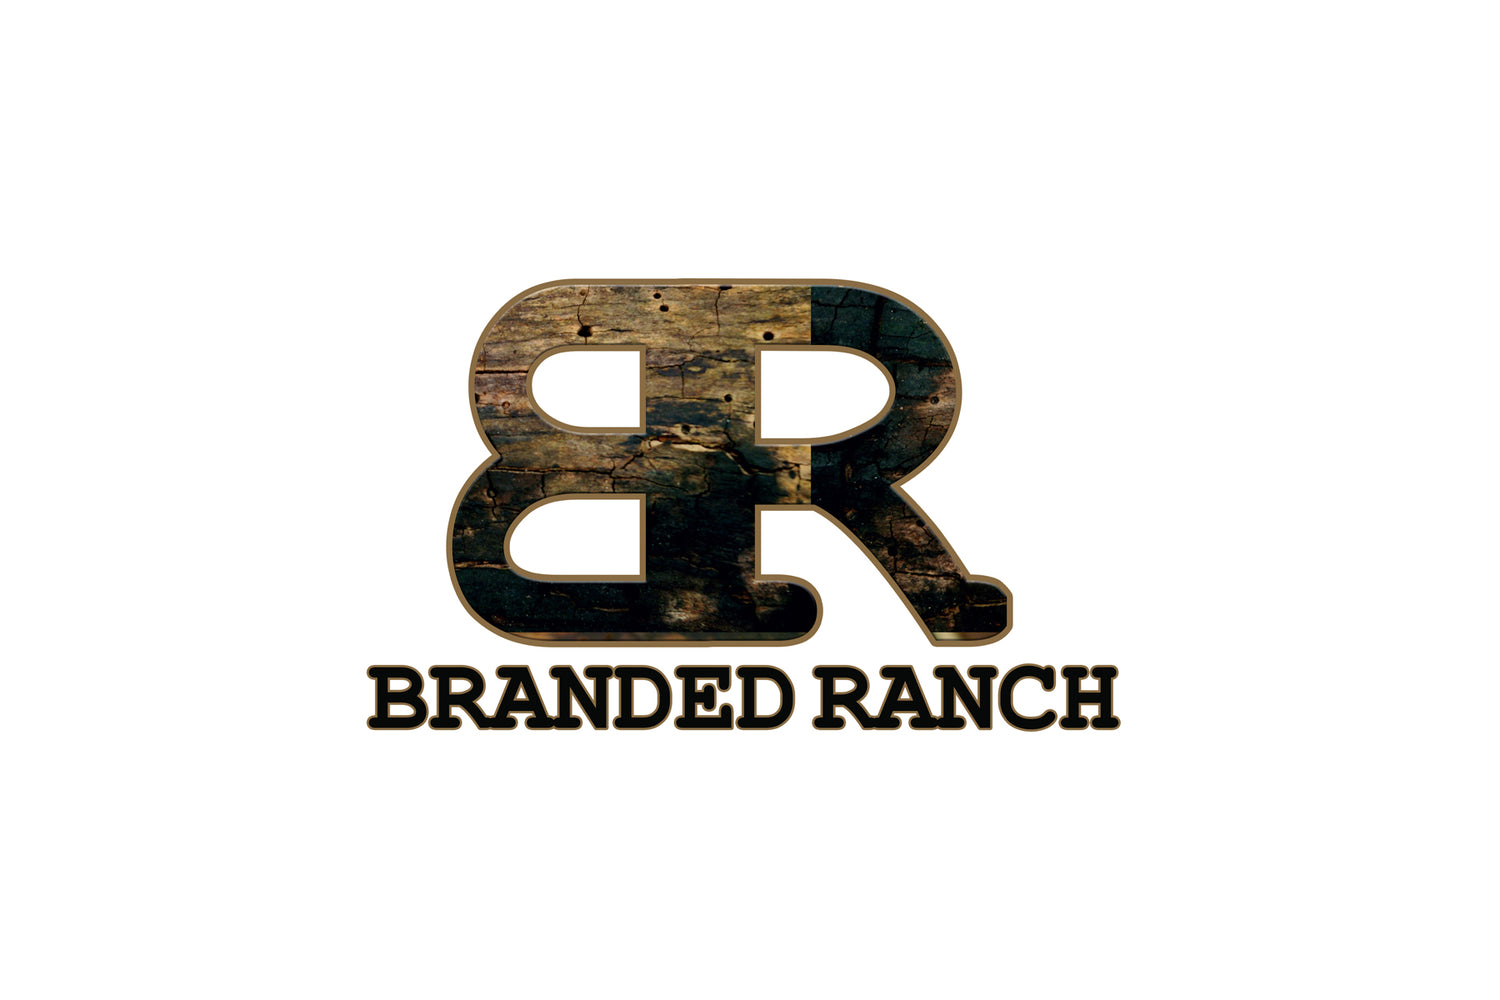 Branded Ranch – Branded Ranch